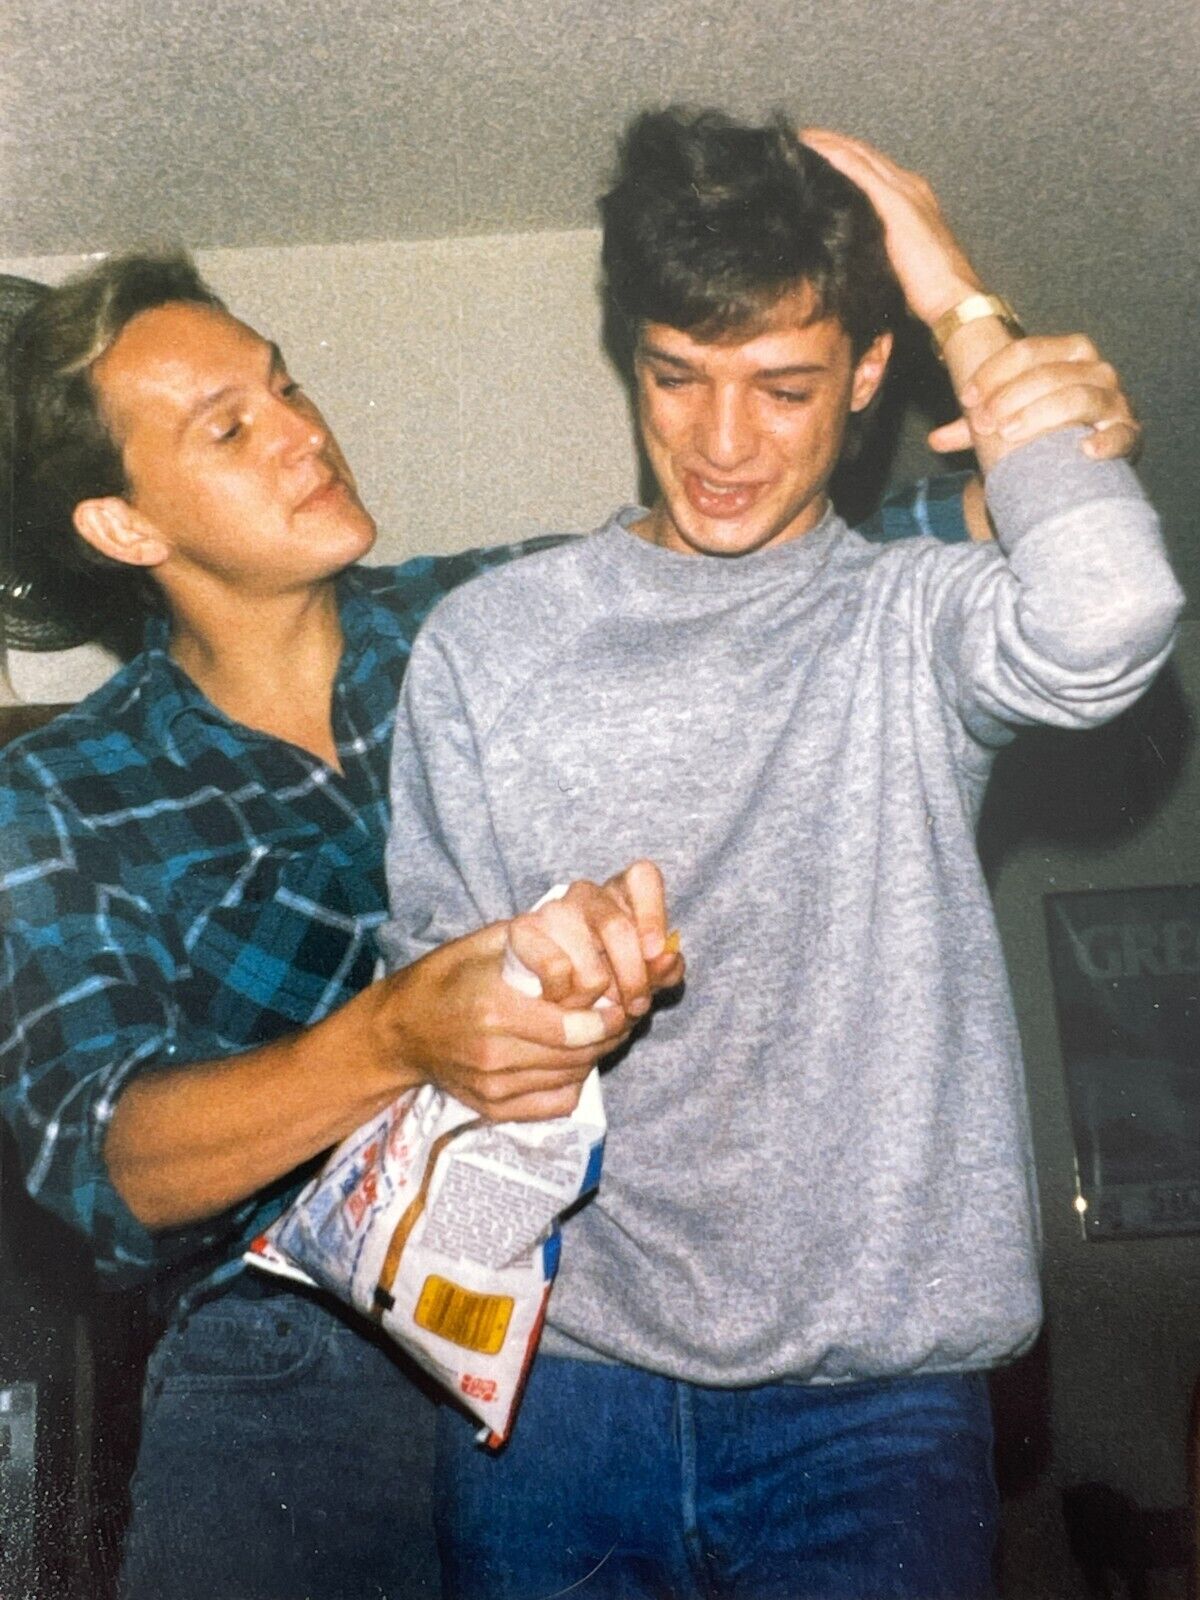 T3  Photograph Cute Men Guy Bumped Head Got Ouchie Rubbing Gay Interest 1980's